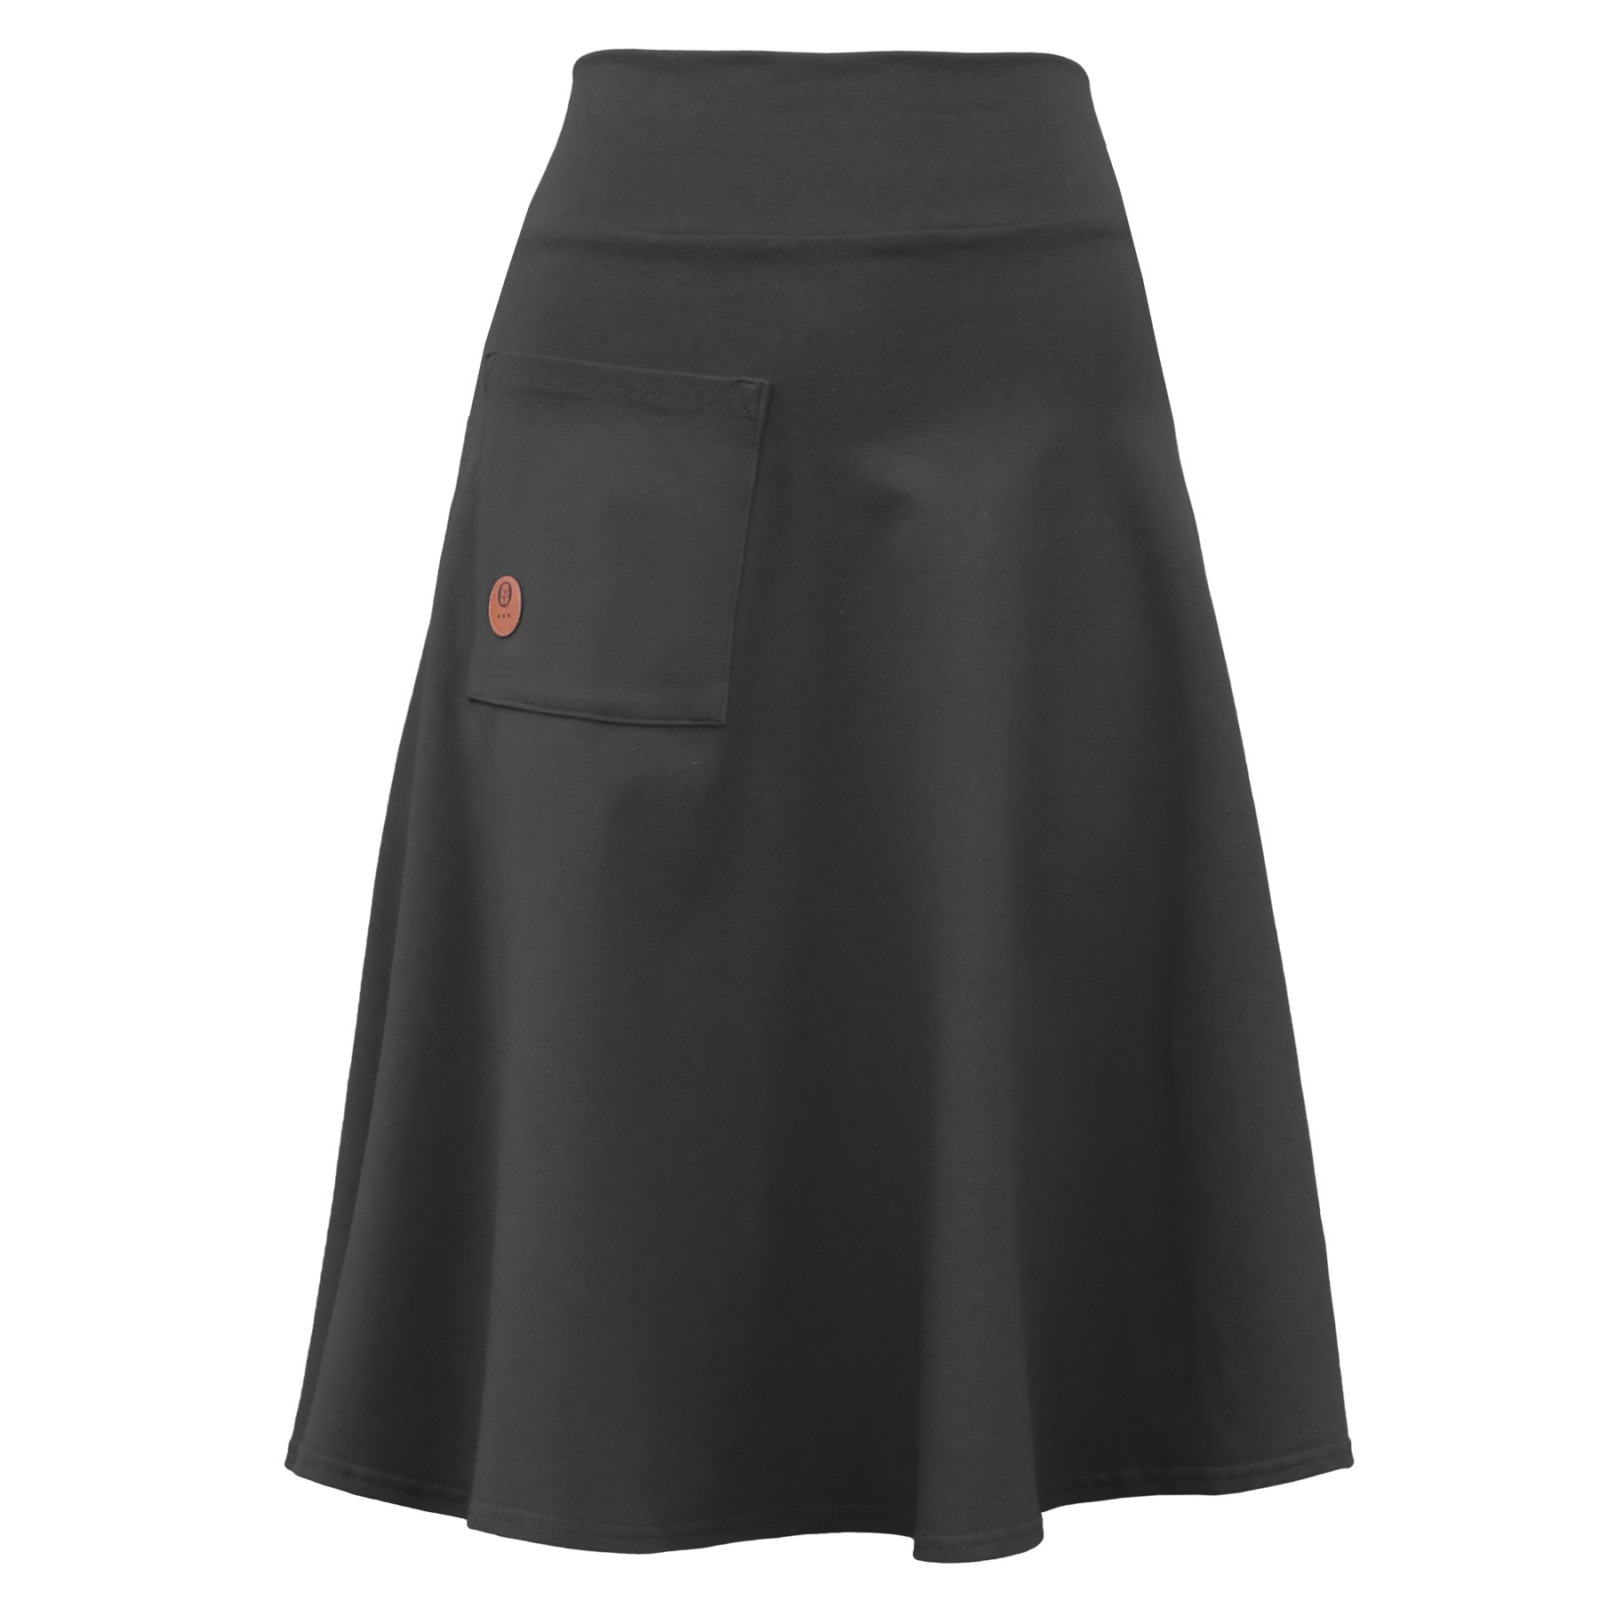 Organic skirt Welle lang, anthracite grey